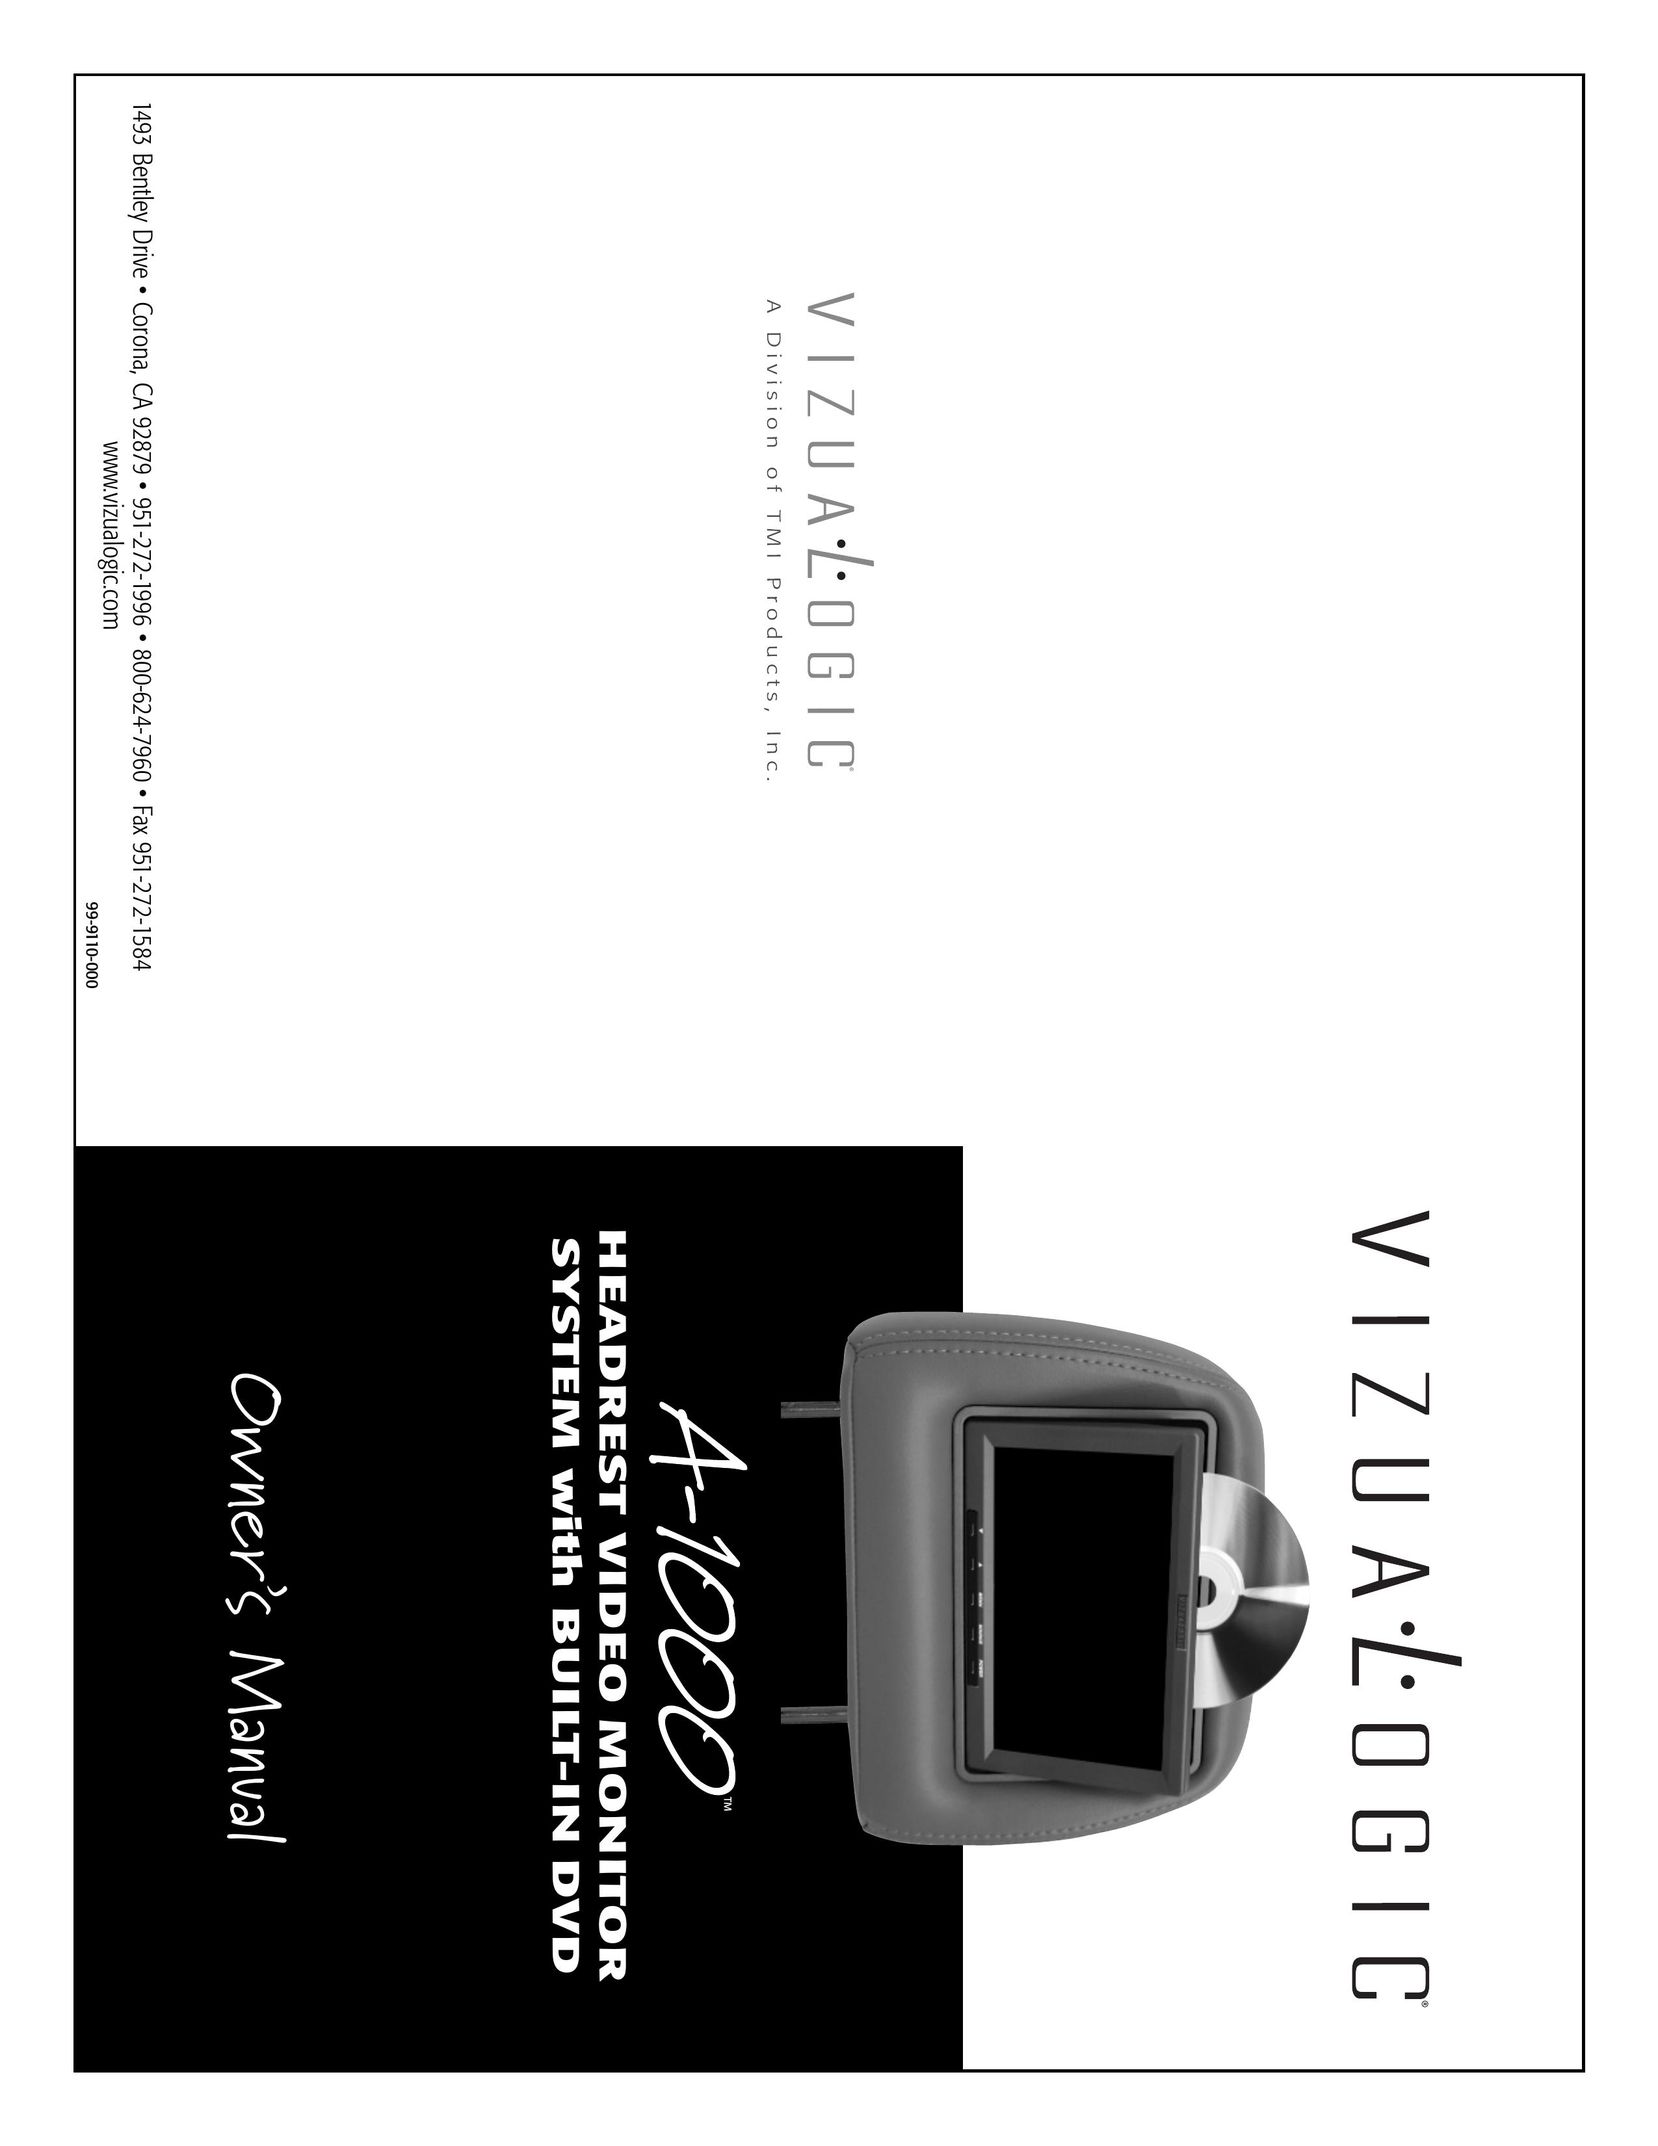 Vizualogic A-1000 Car Video System User Manual